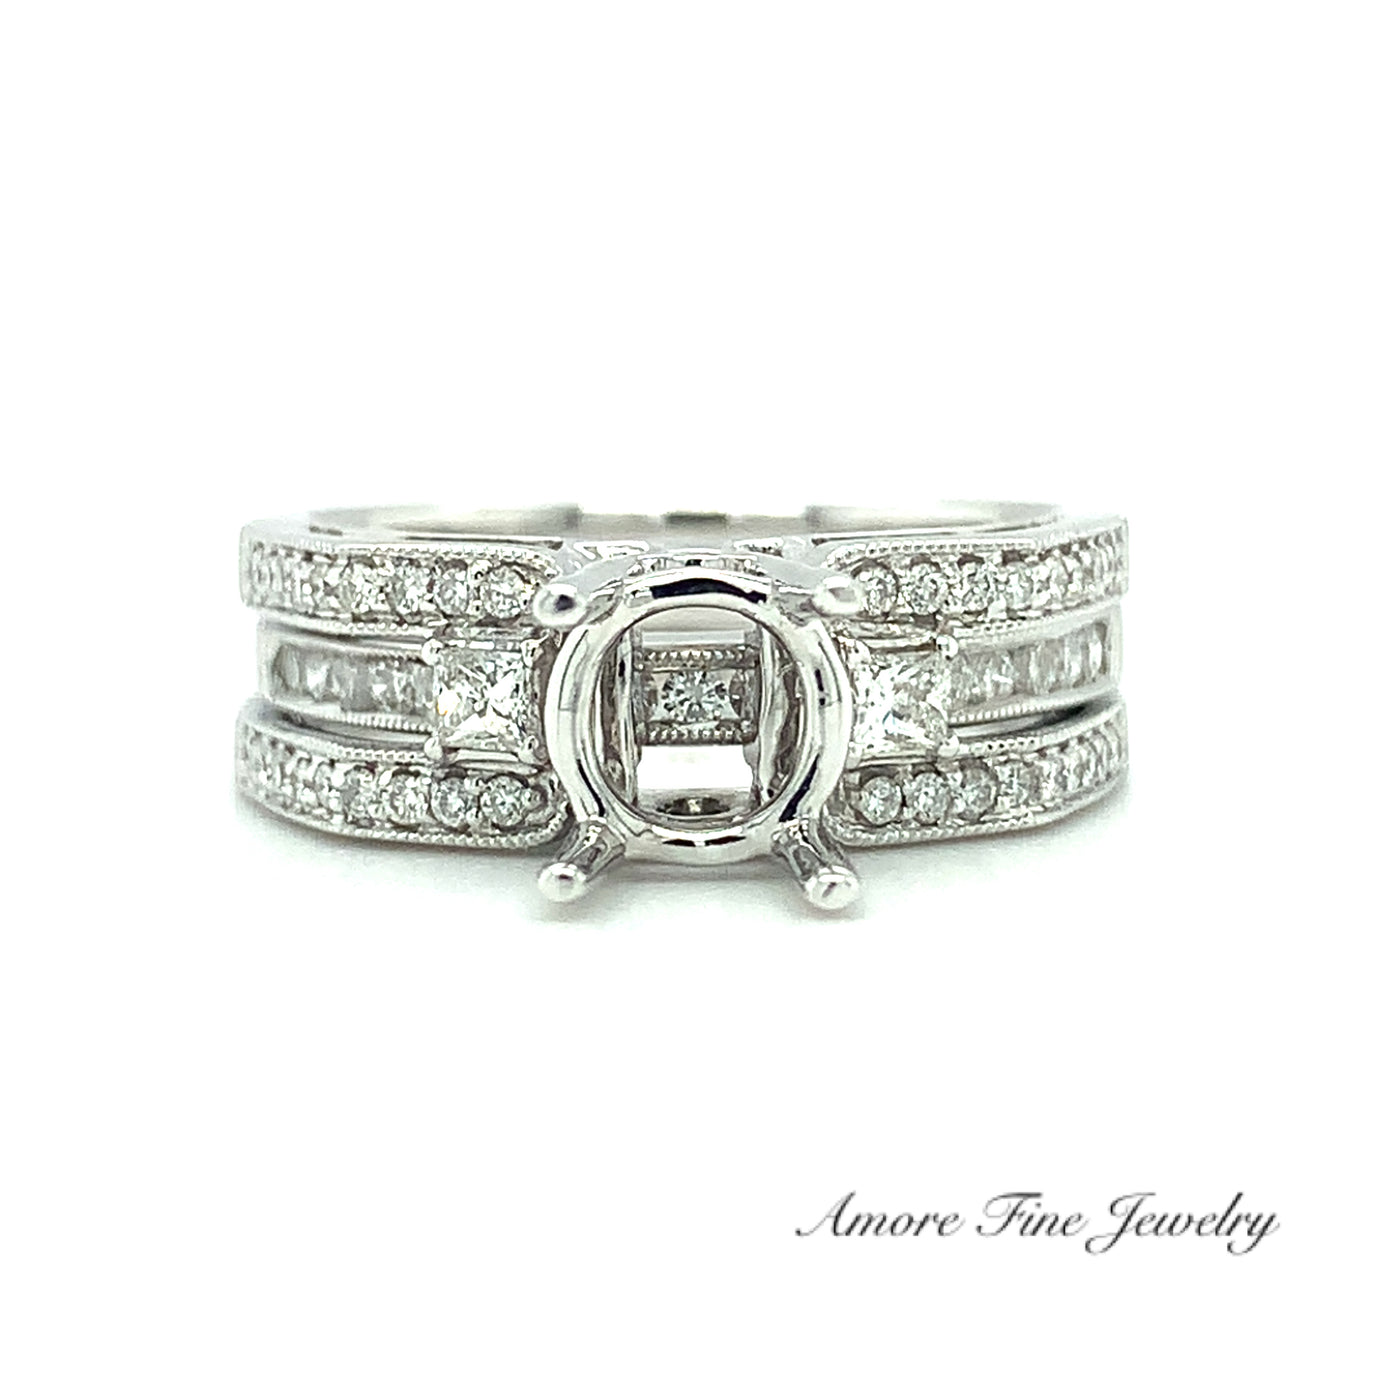 Diamond Engagement Ring Setting & Wedding Ring